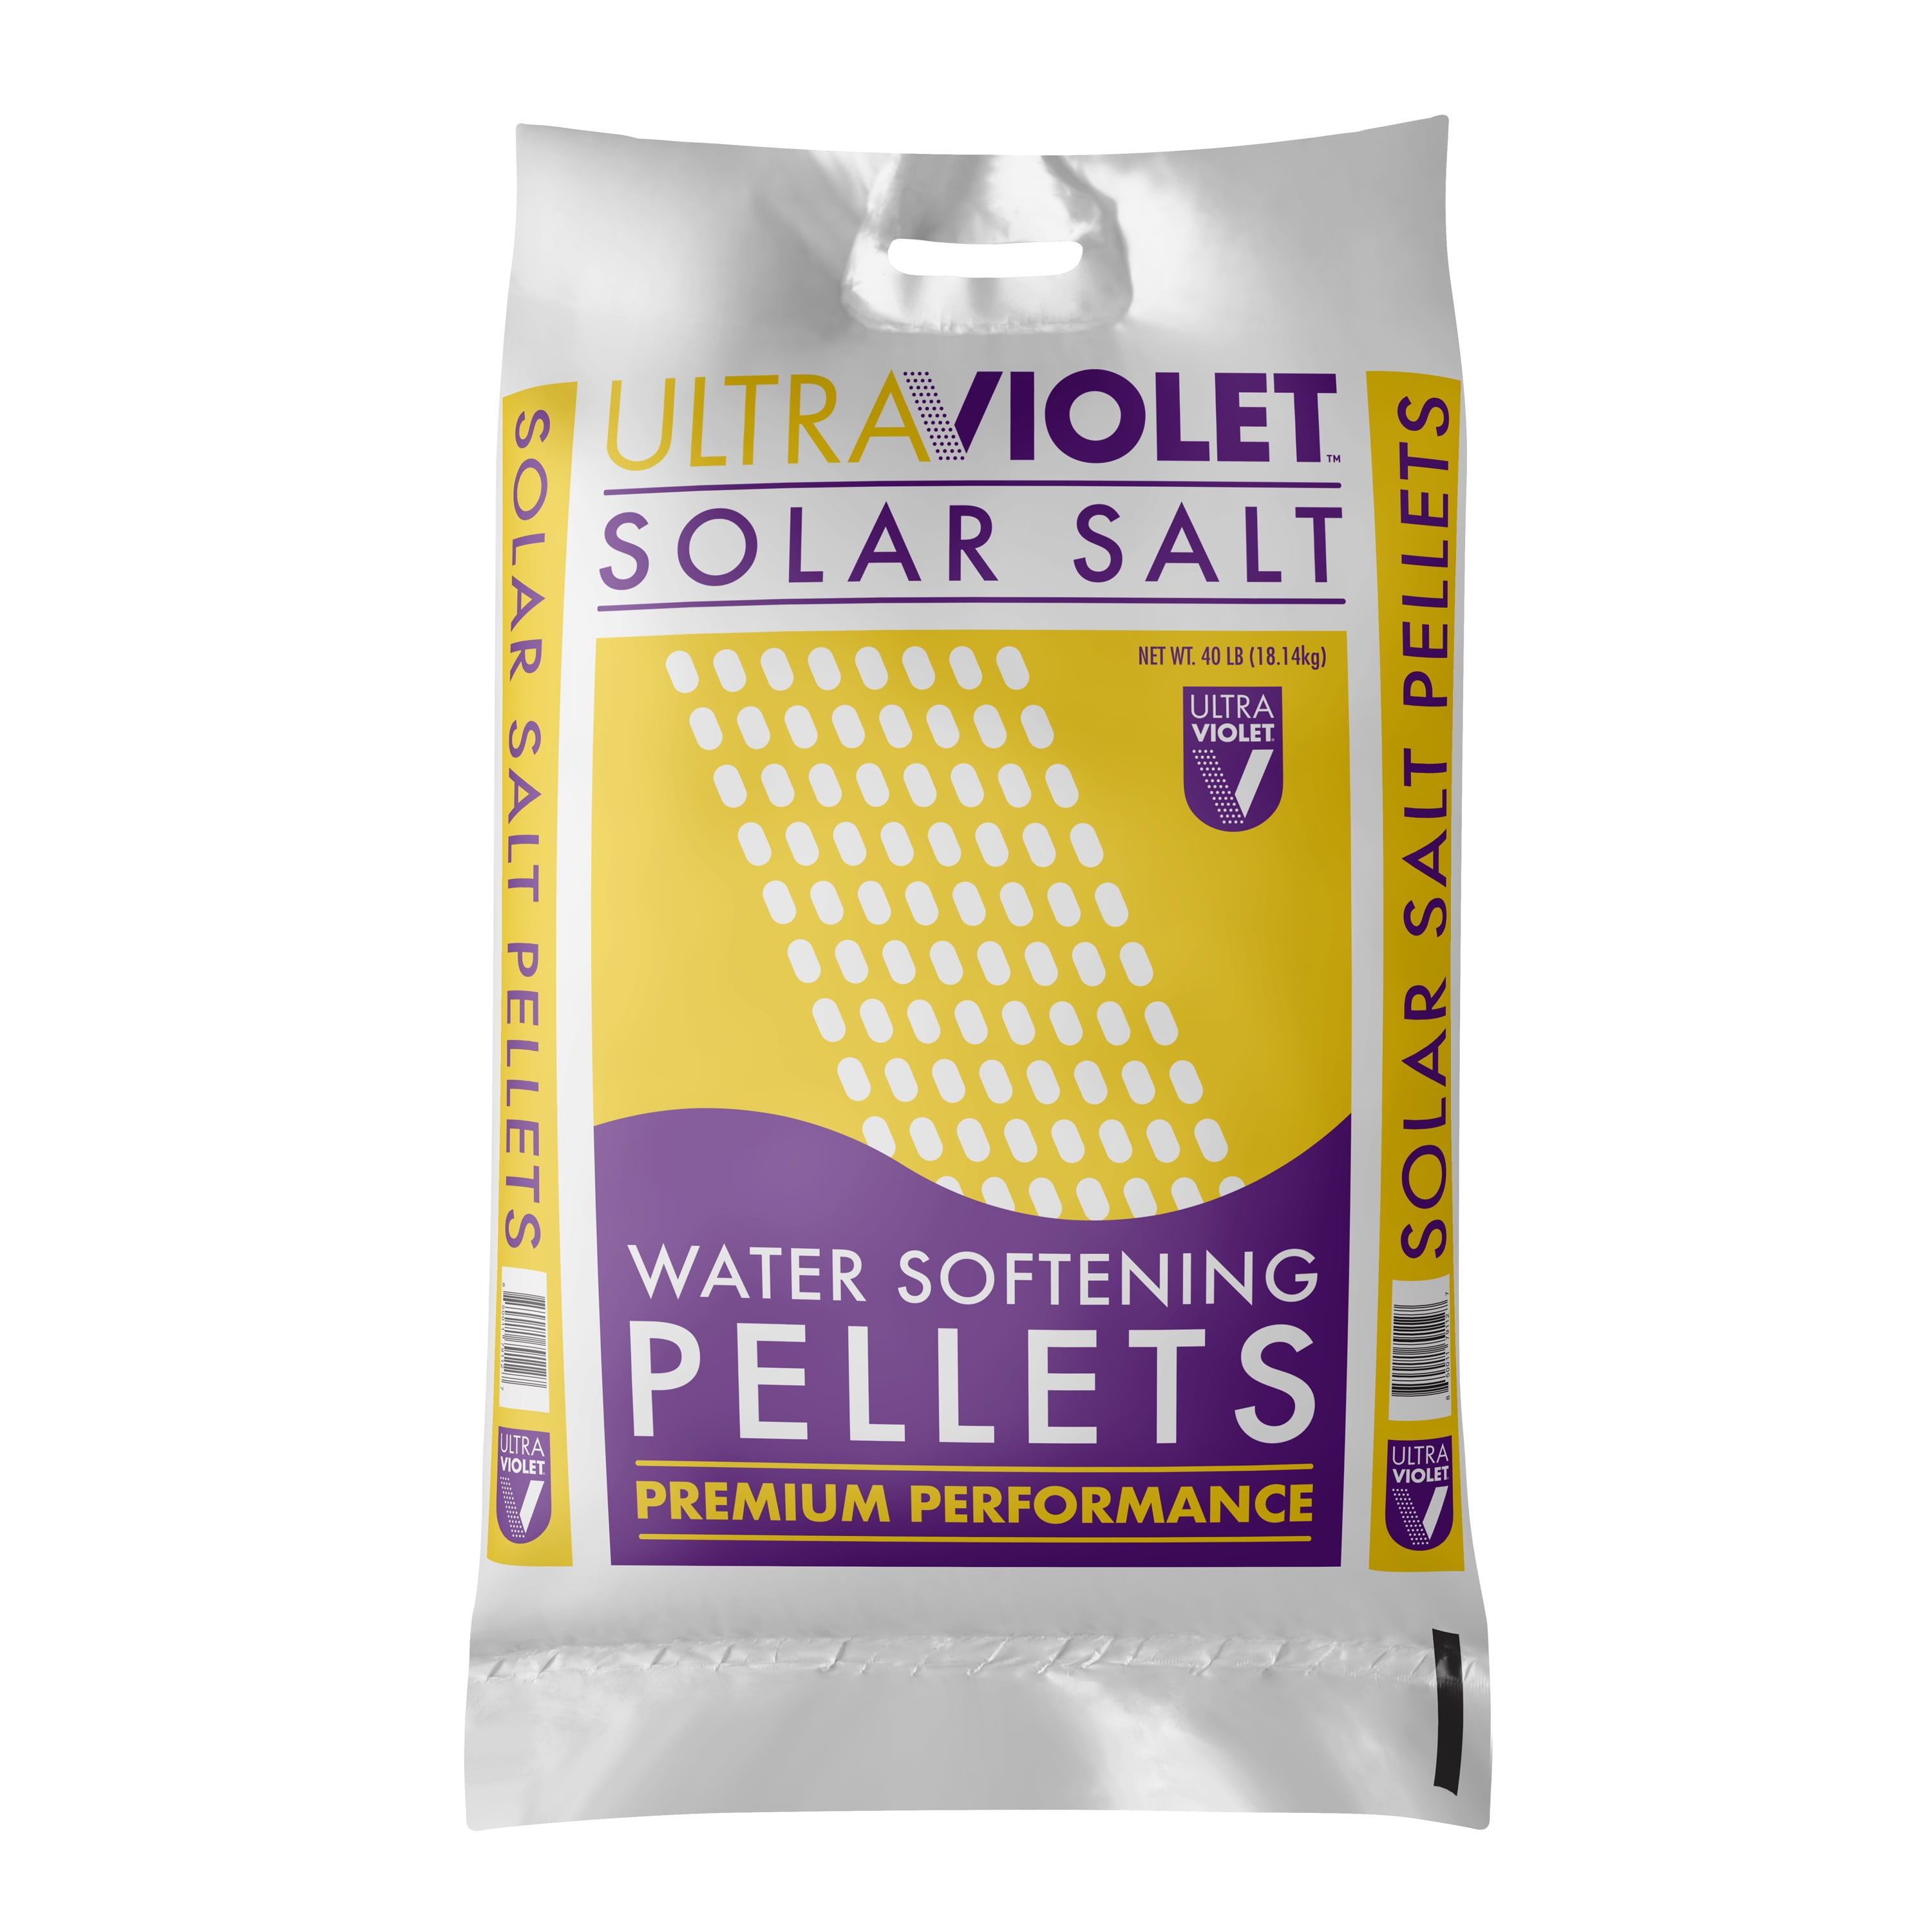 Ultraviolet Solar Salt Water Softening Pellets, Premium 